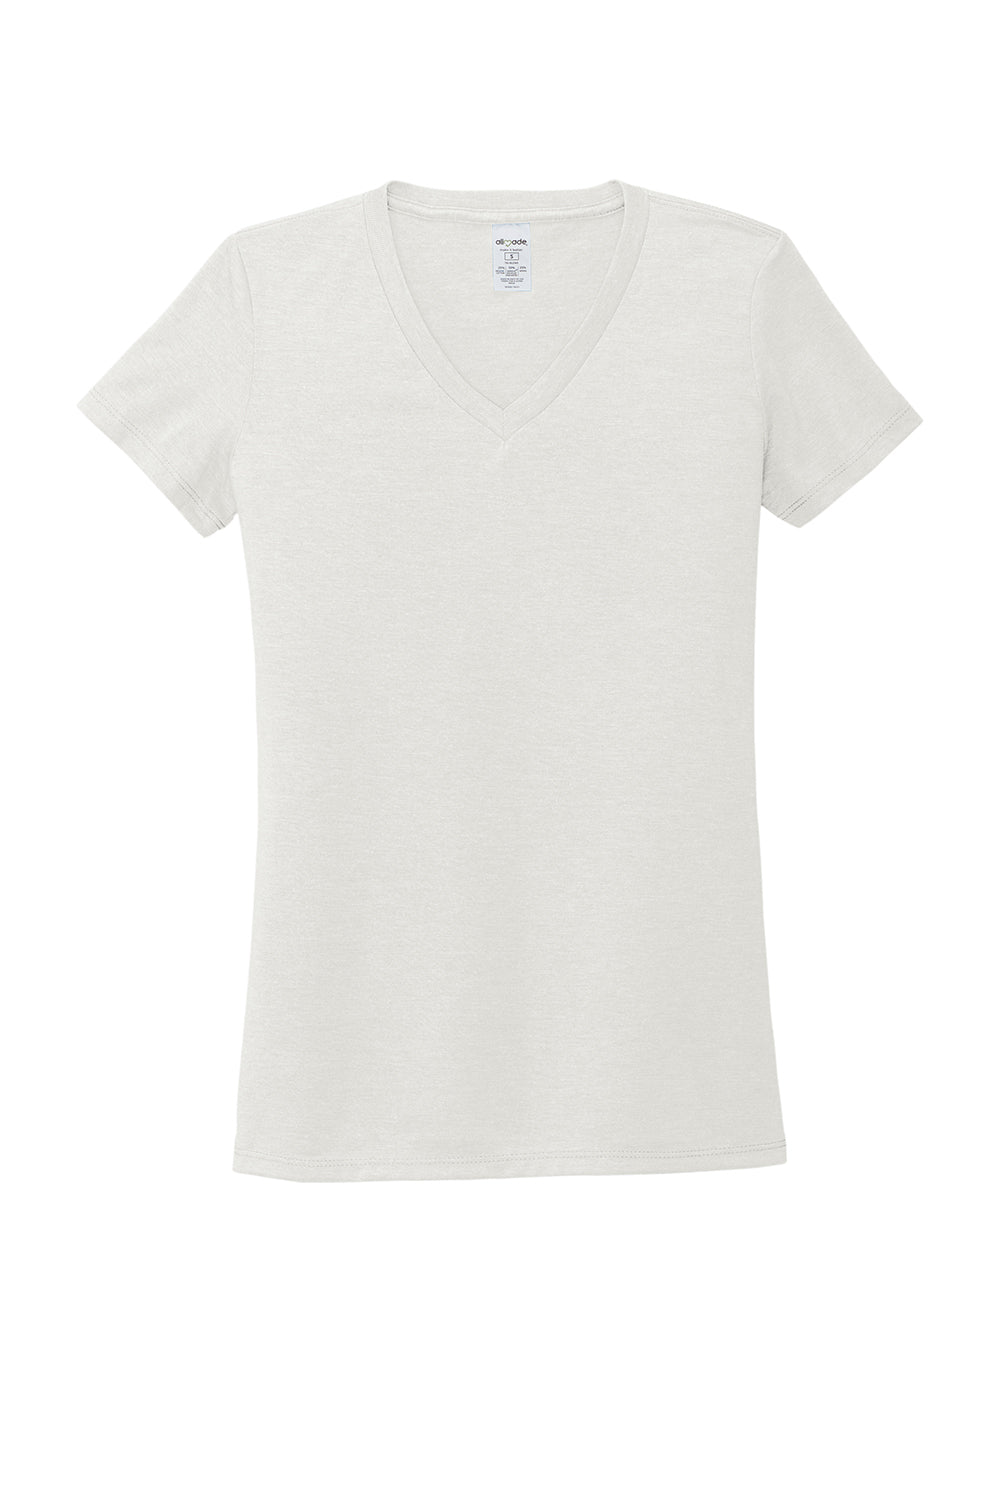 Allmade AL2018 Womens Short Sleeve V-Neck T-Shirt Fairly White Flat Front